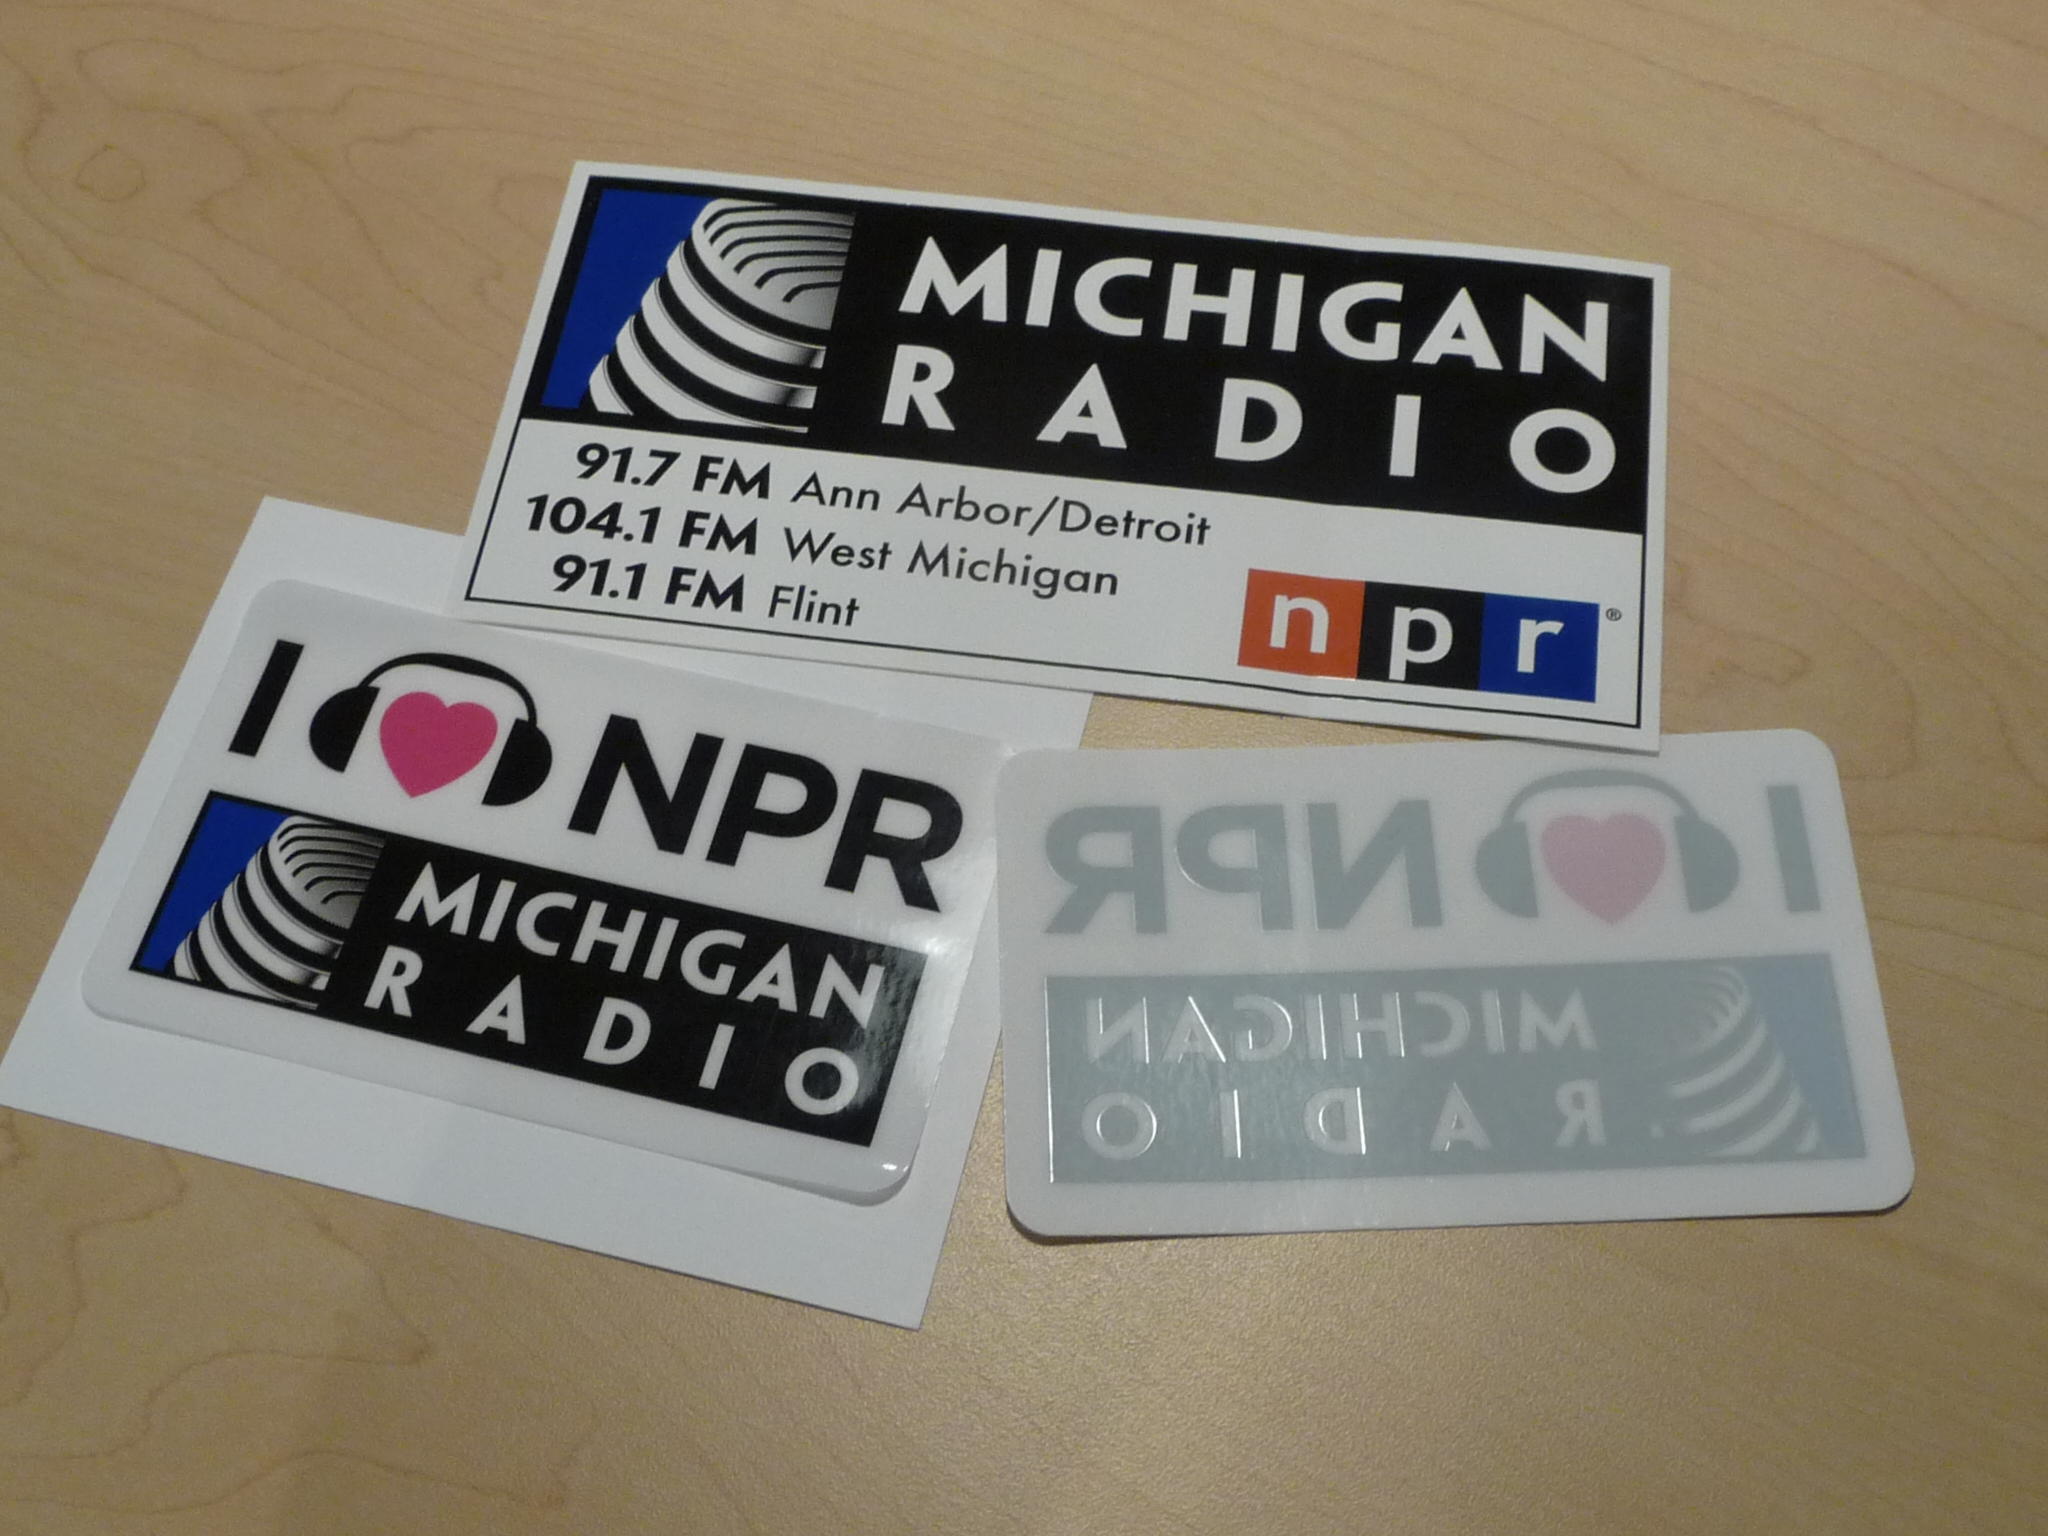 Get A Michigan Radio Bumper Sticker And Window Clings Michigan Radio